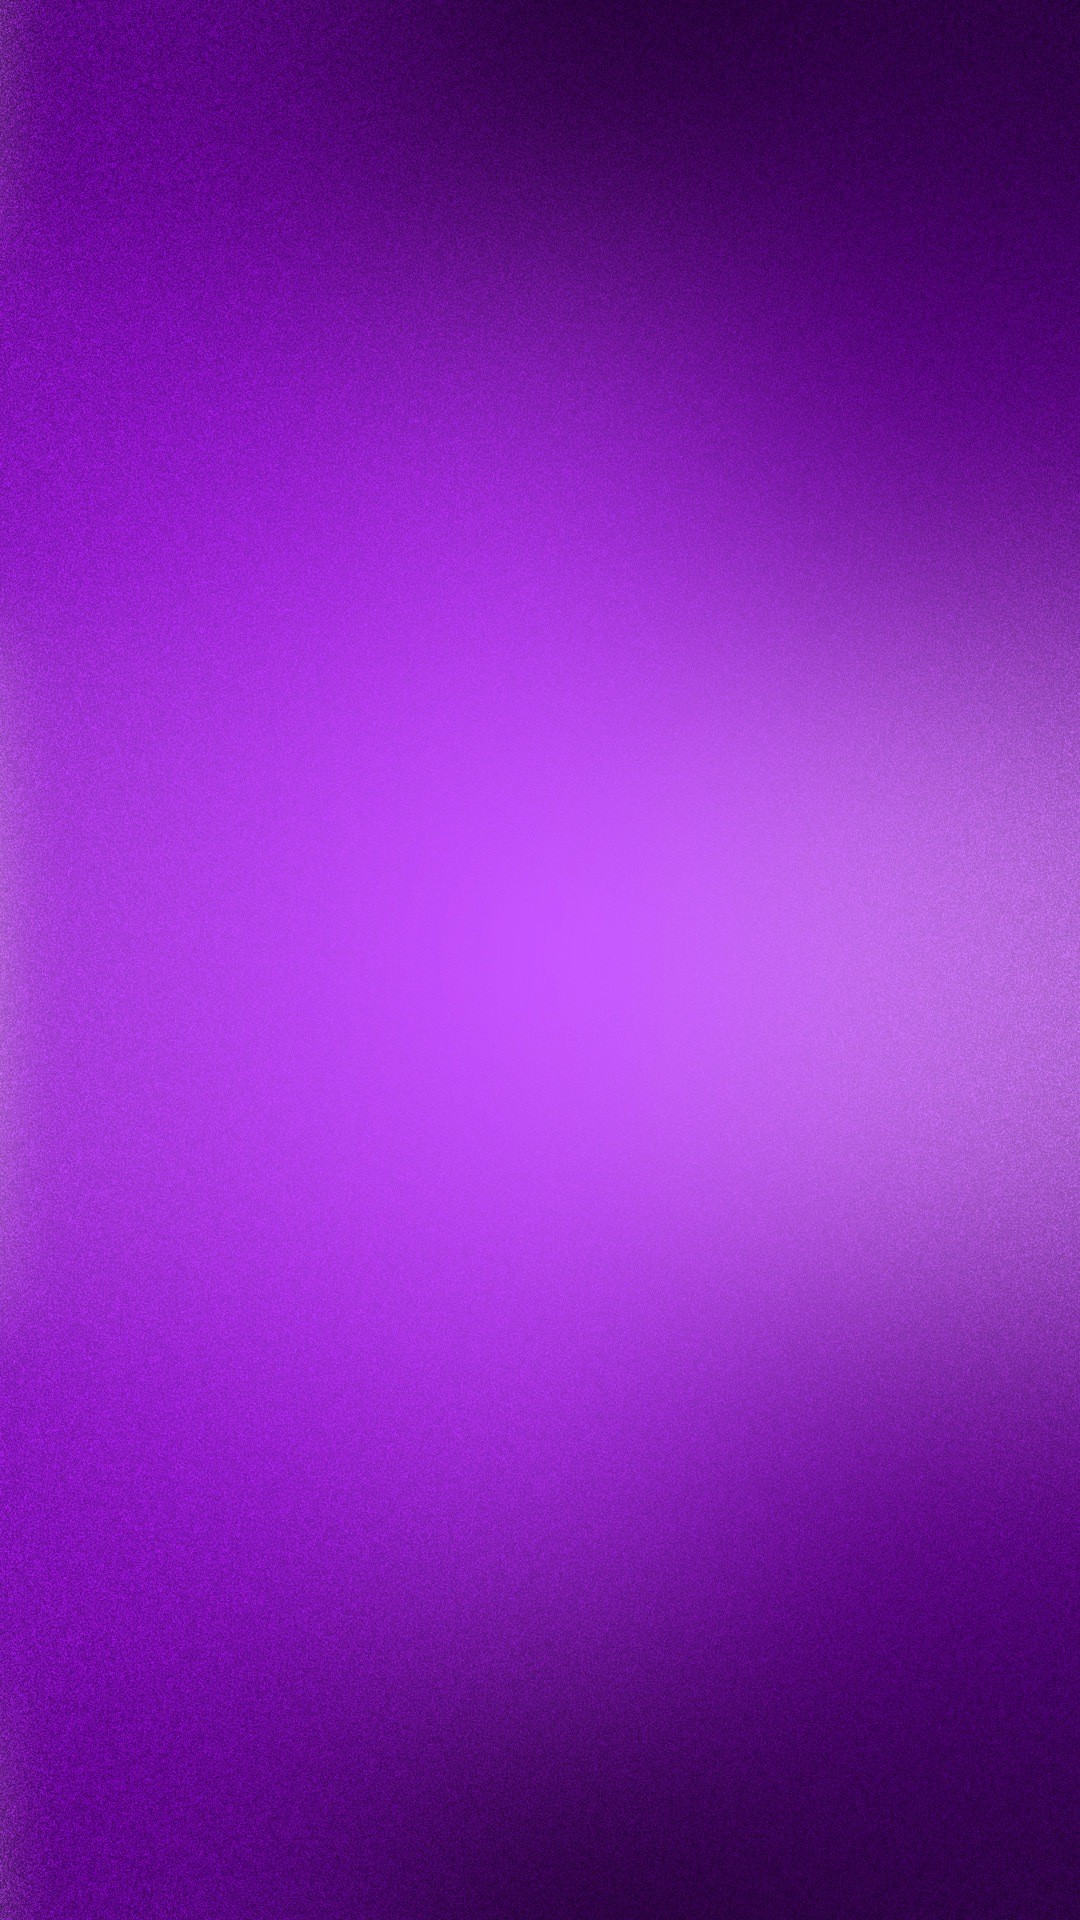 HD Purple iPhone Wallpaper resolution 1080x1920